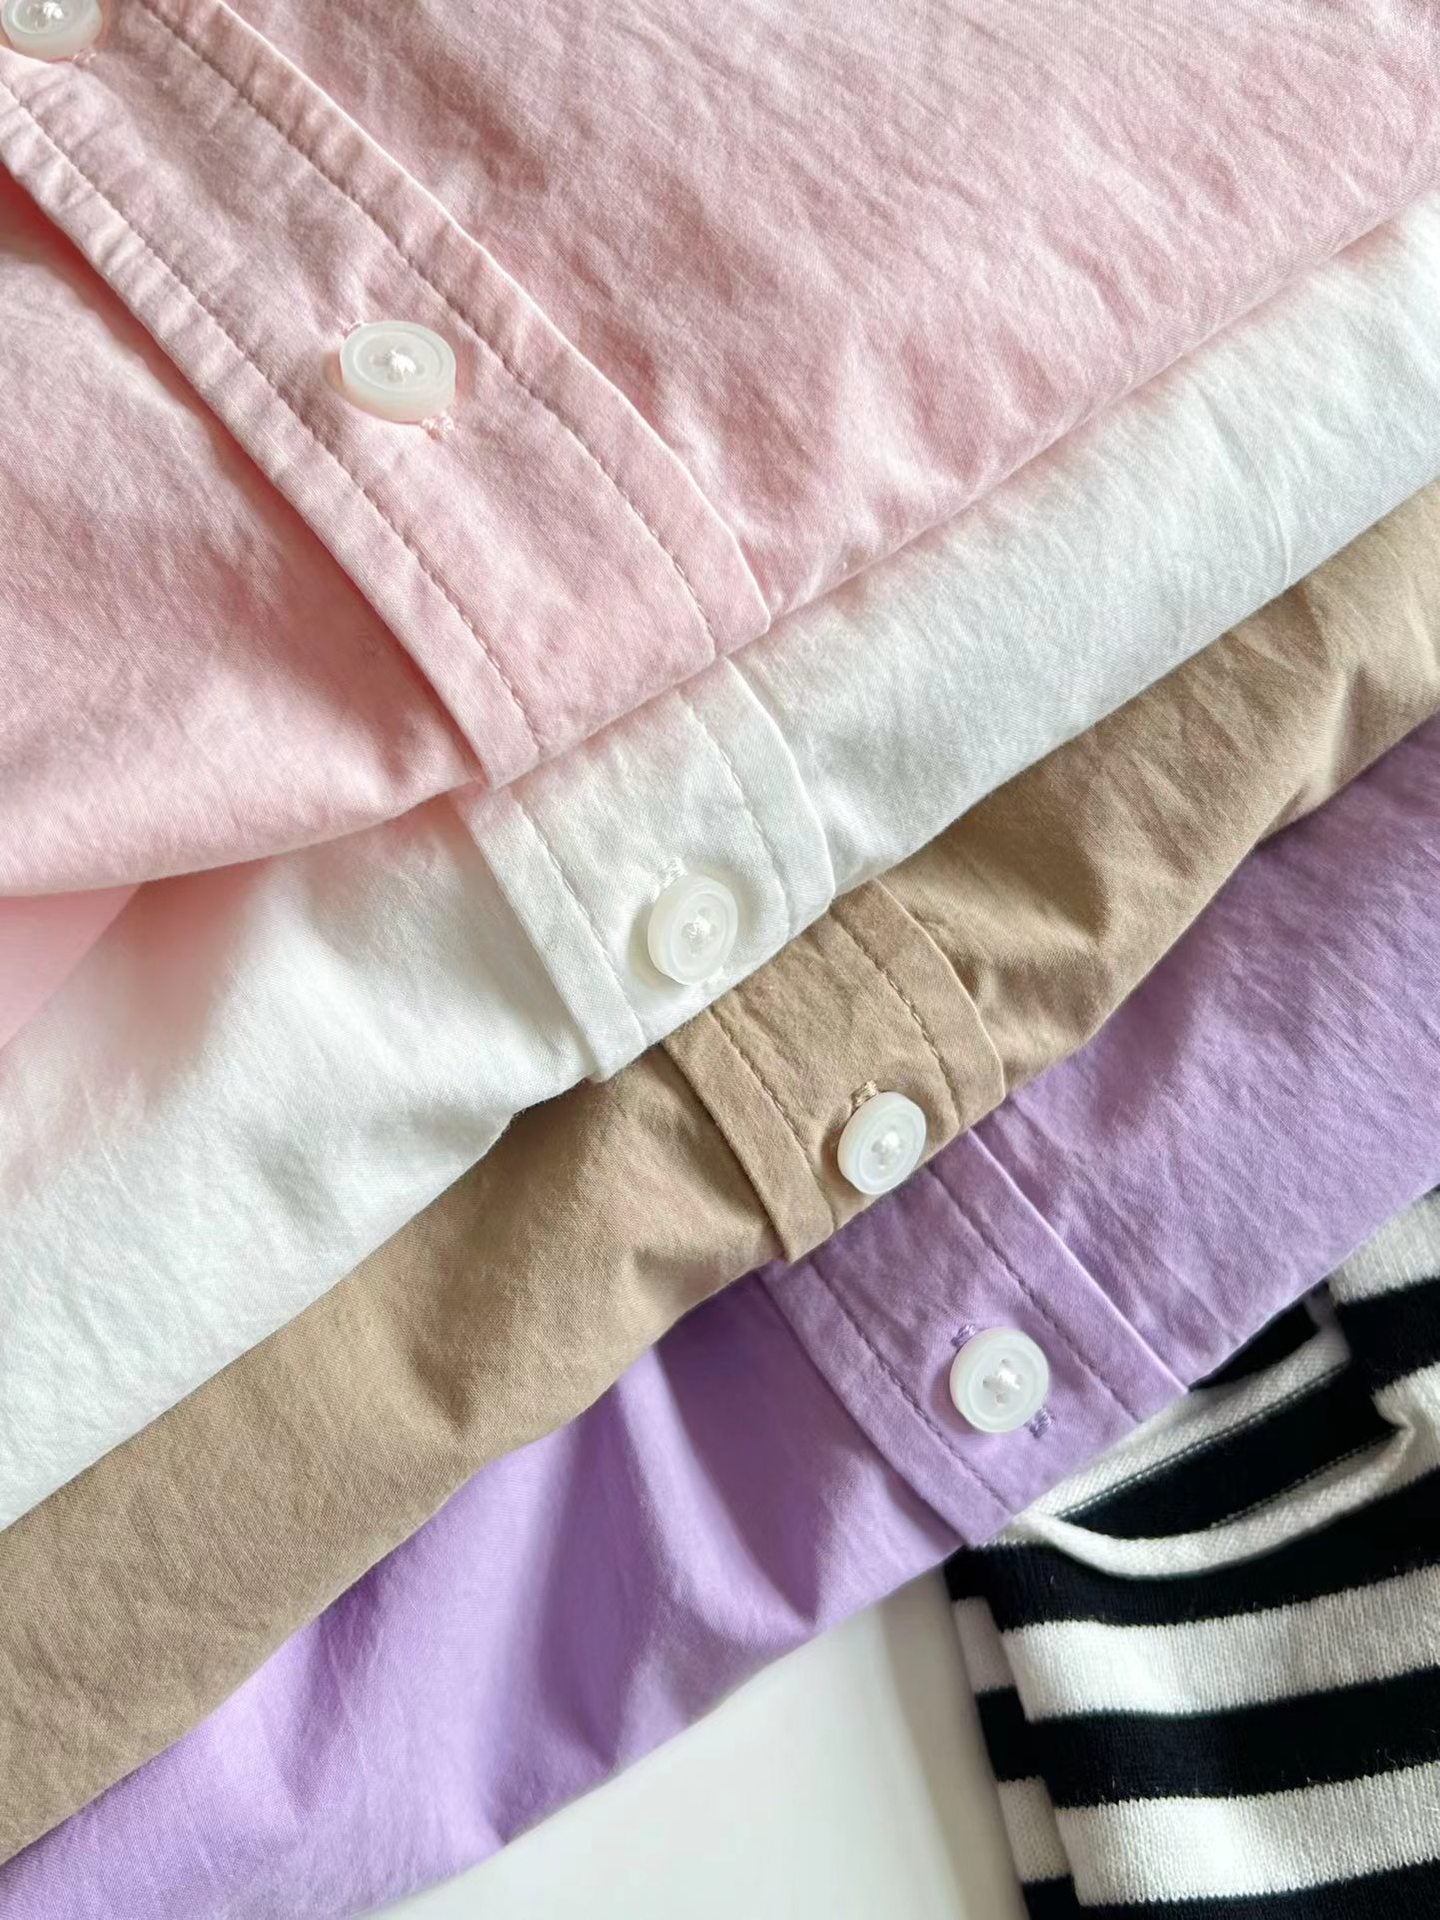 Nonothing| 100% cotton shirt for women ( 4 colors)